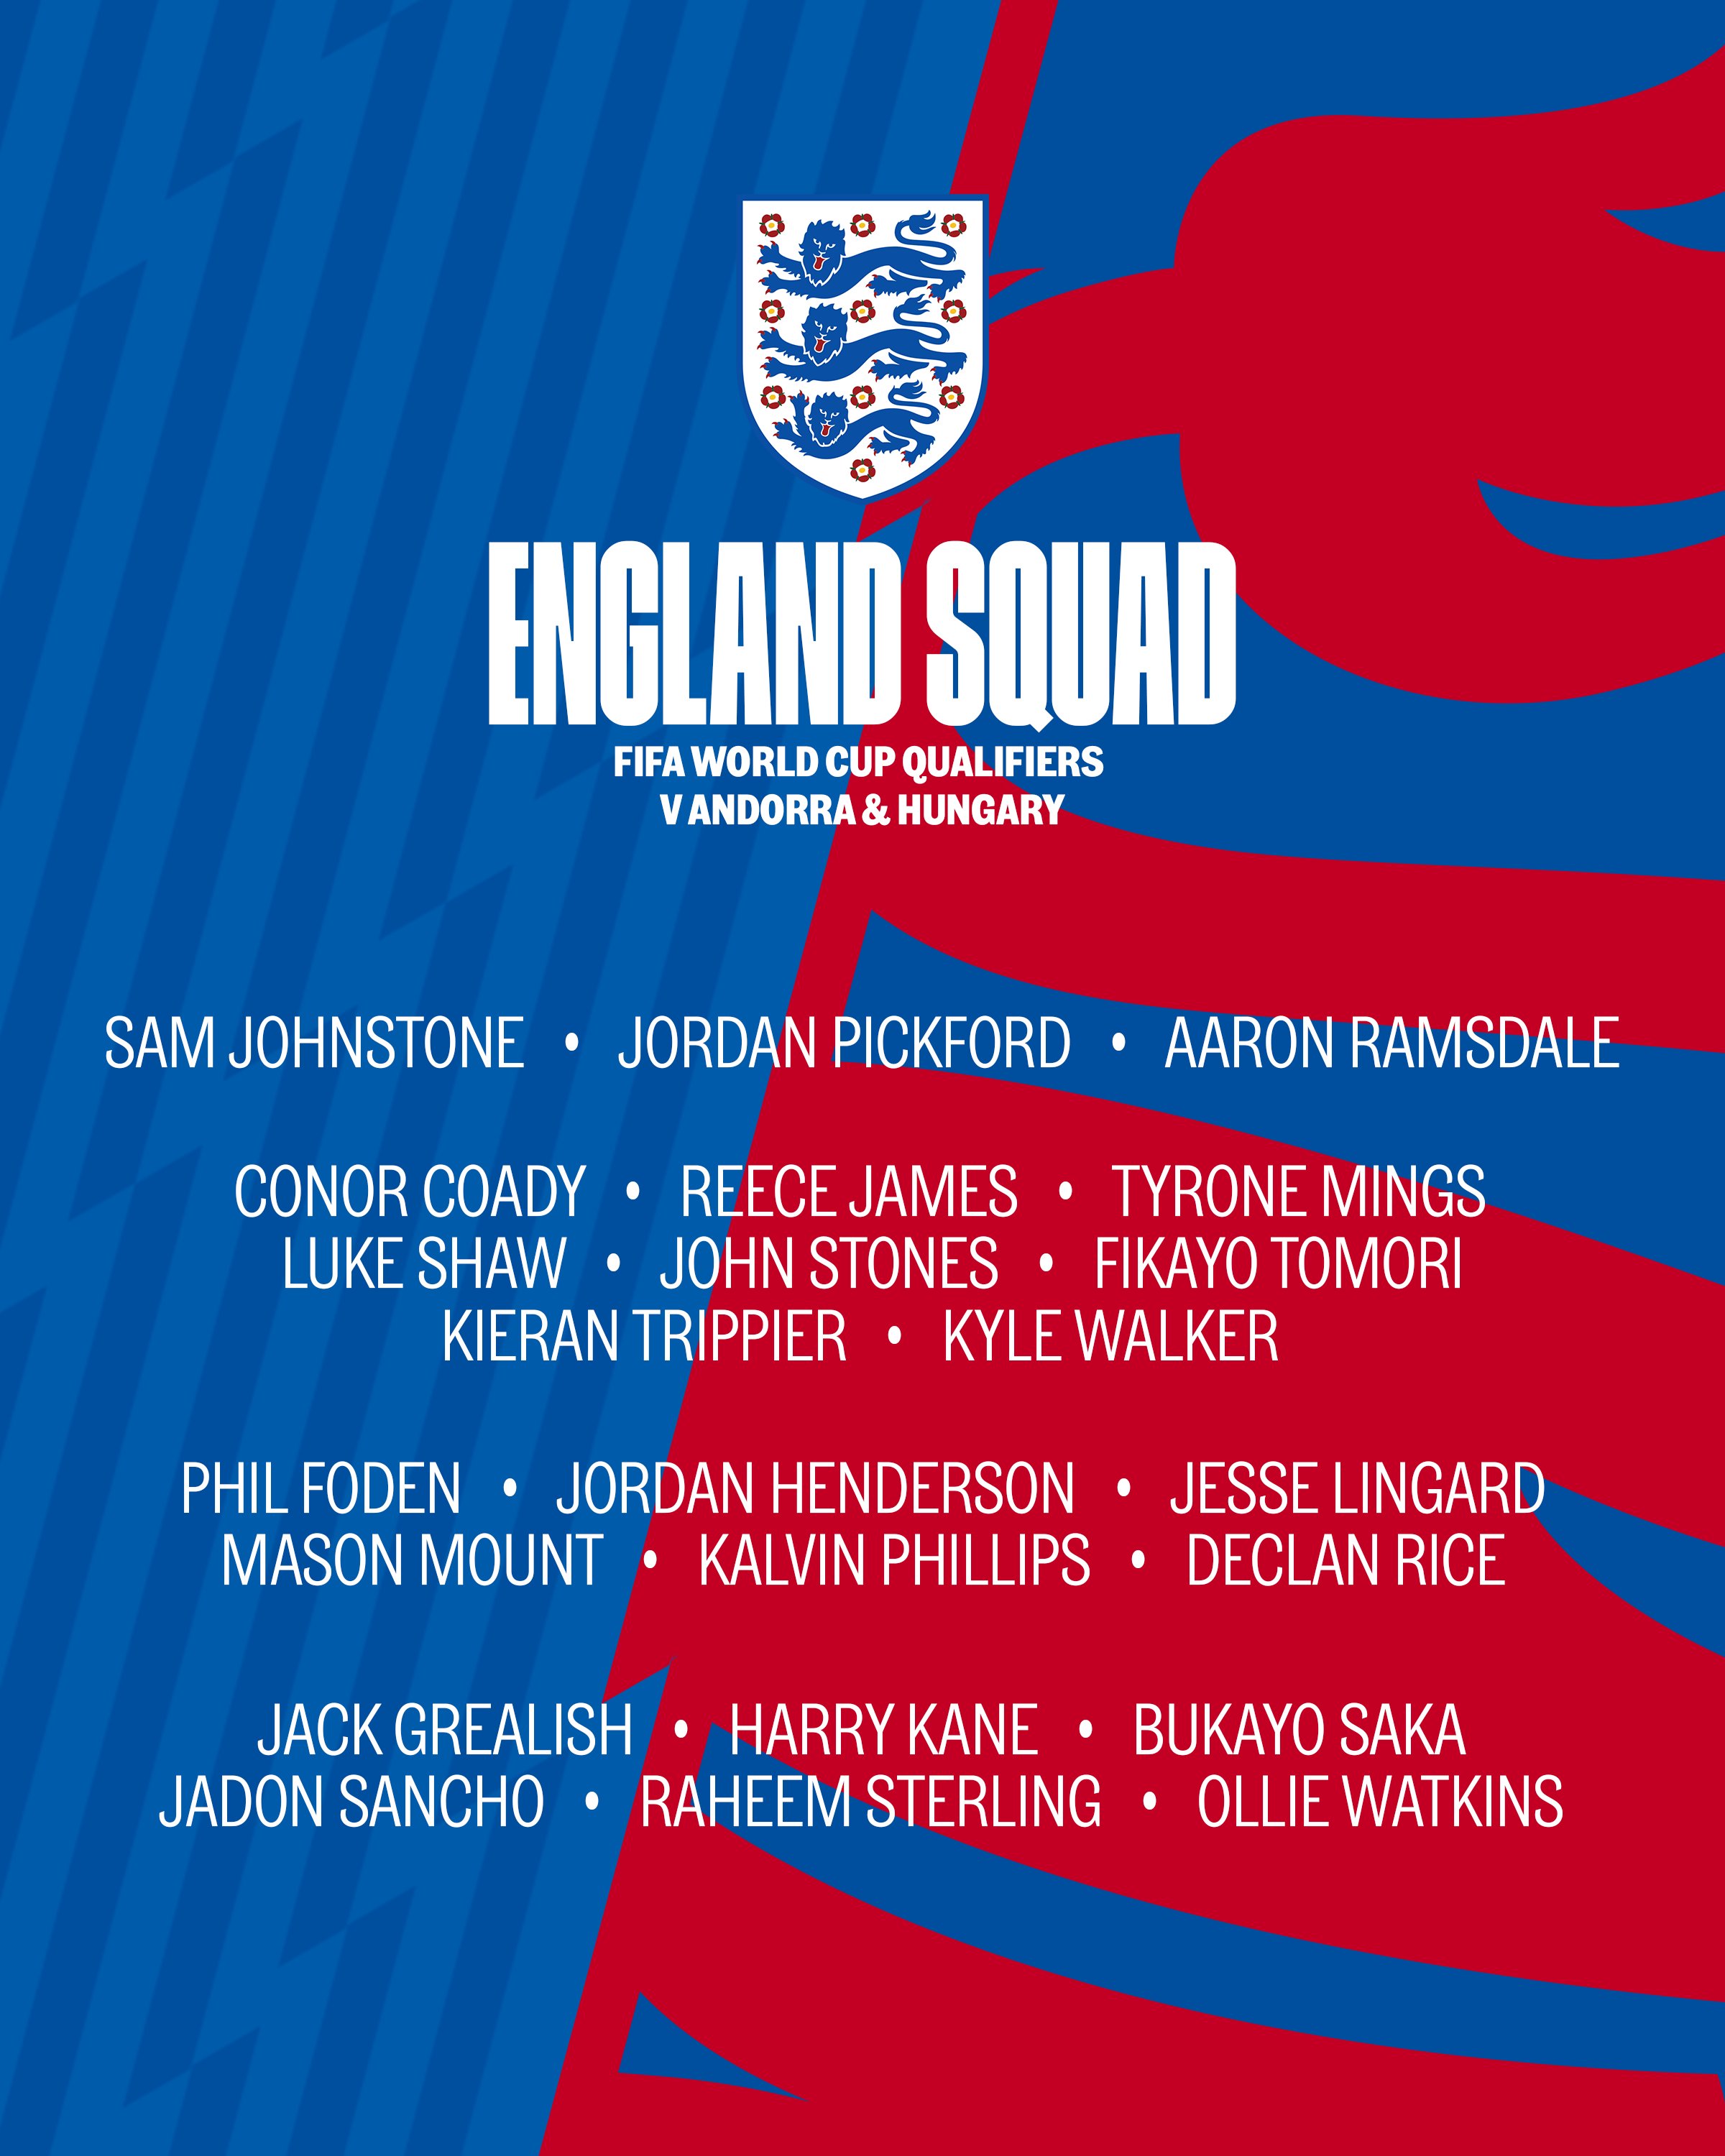 England squad list